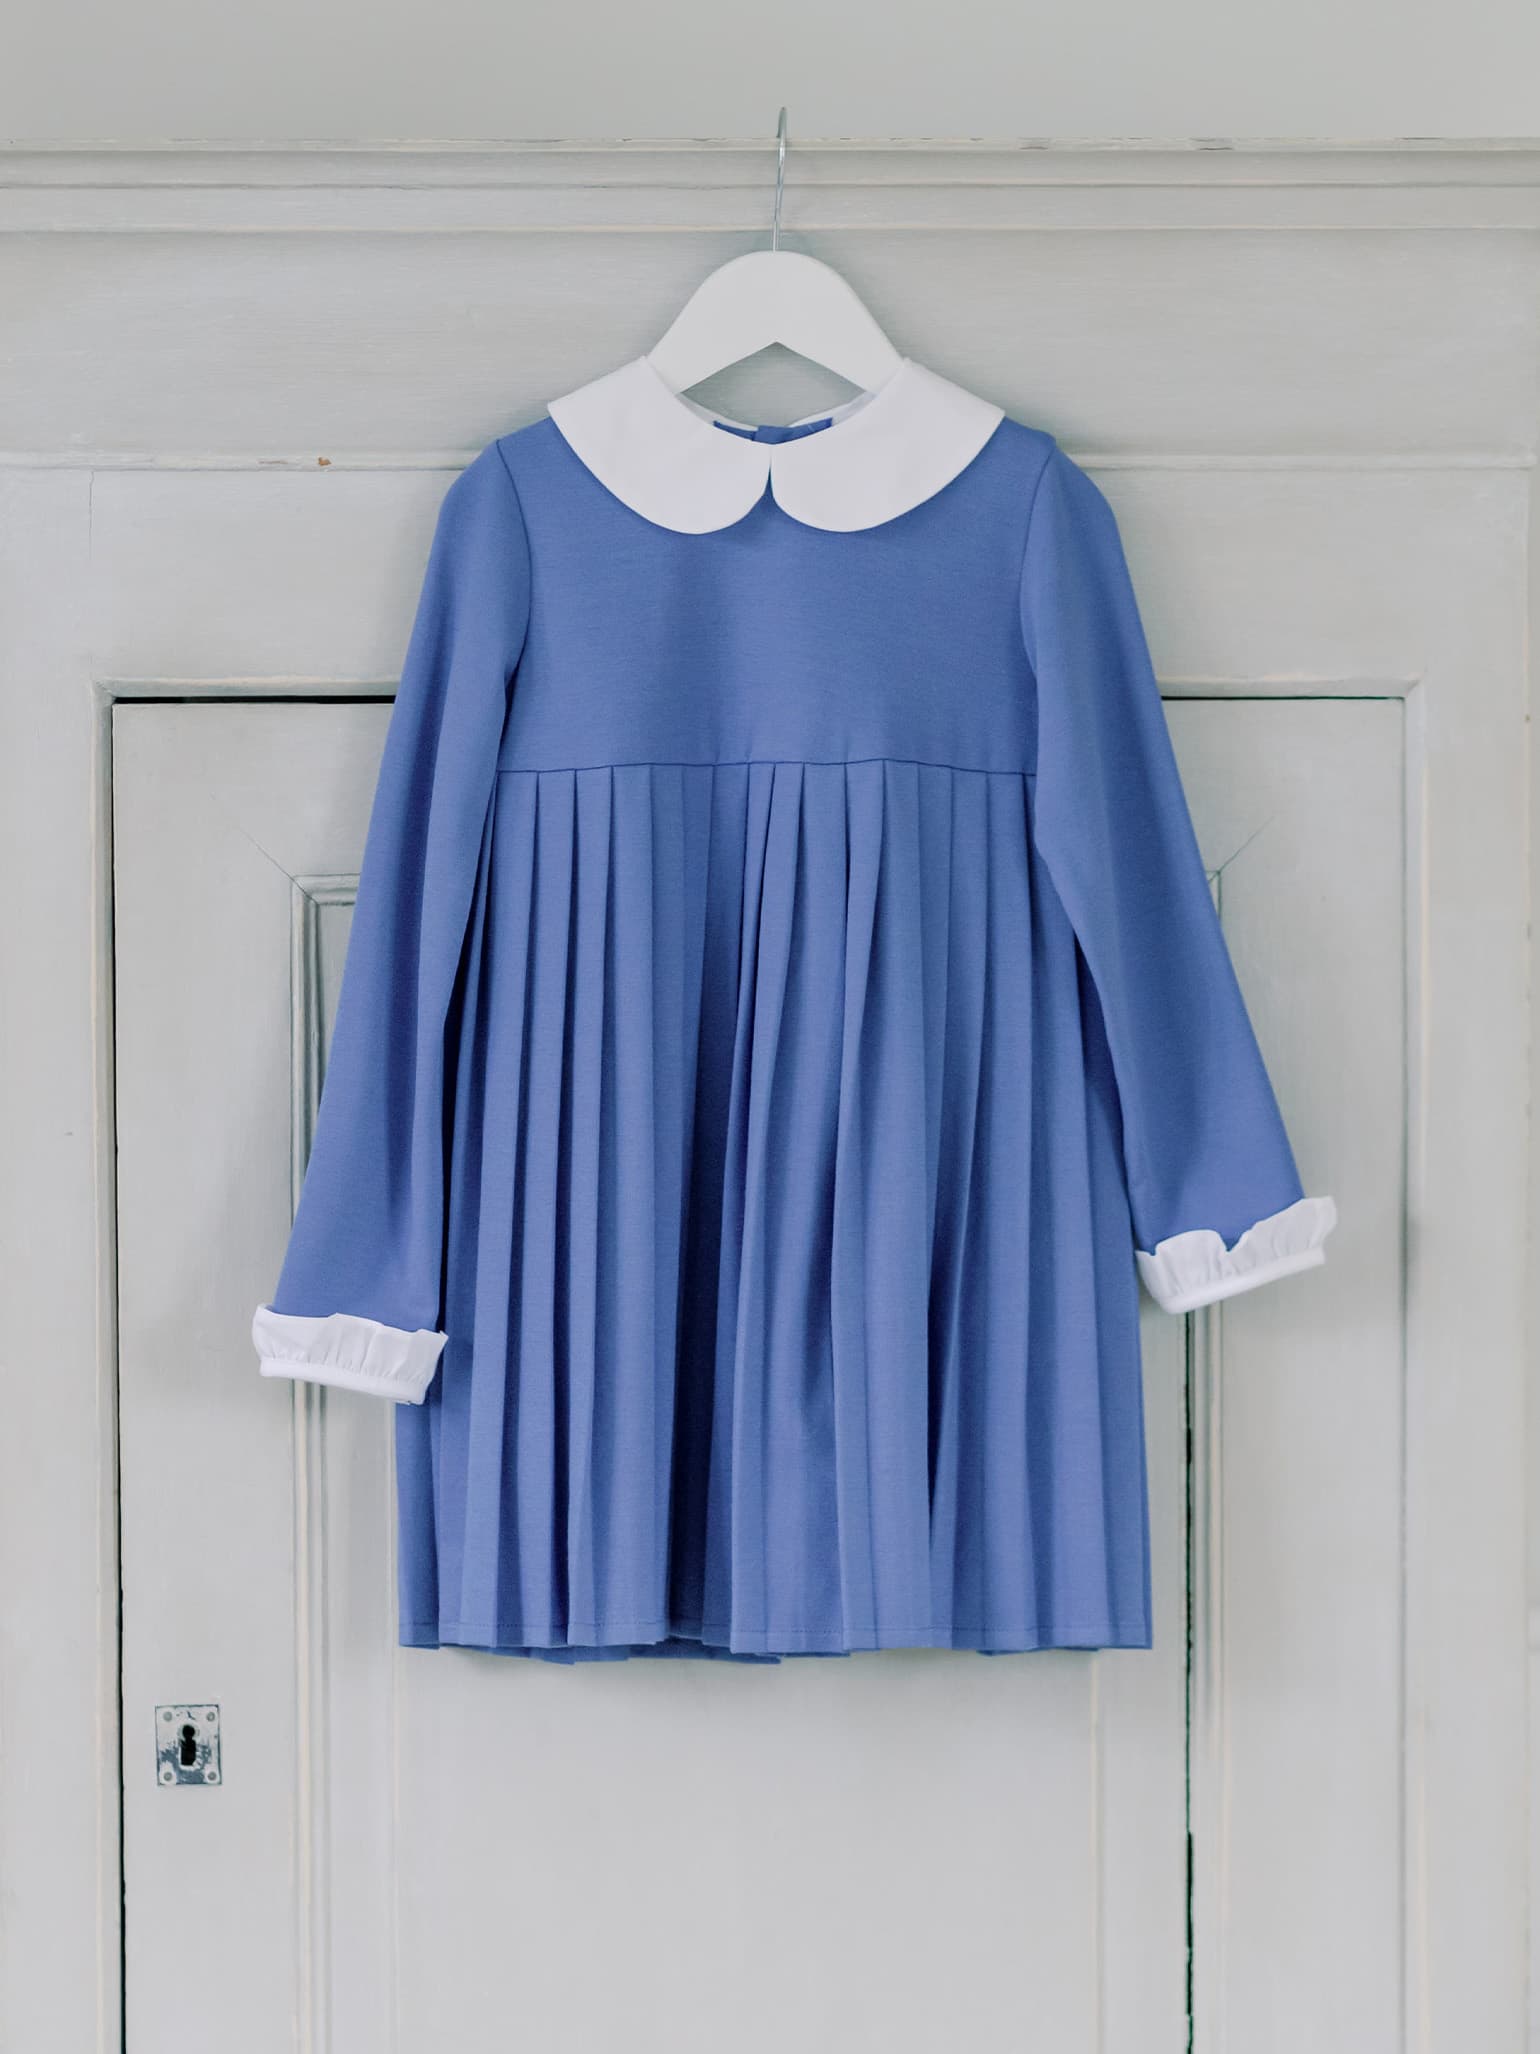 Blue Anna Girl Empire Dress